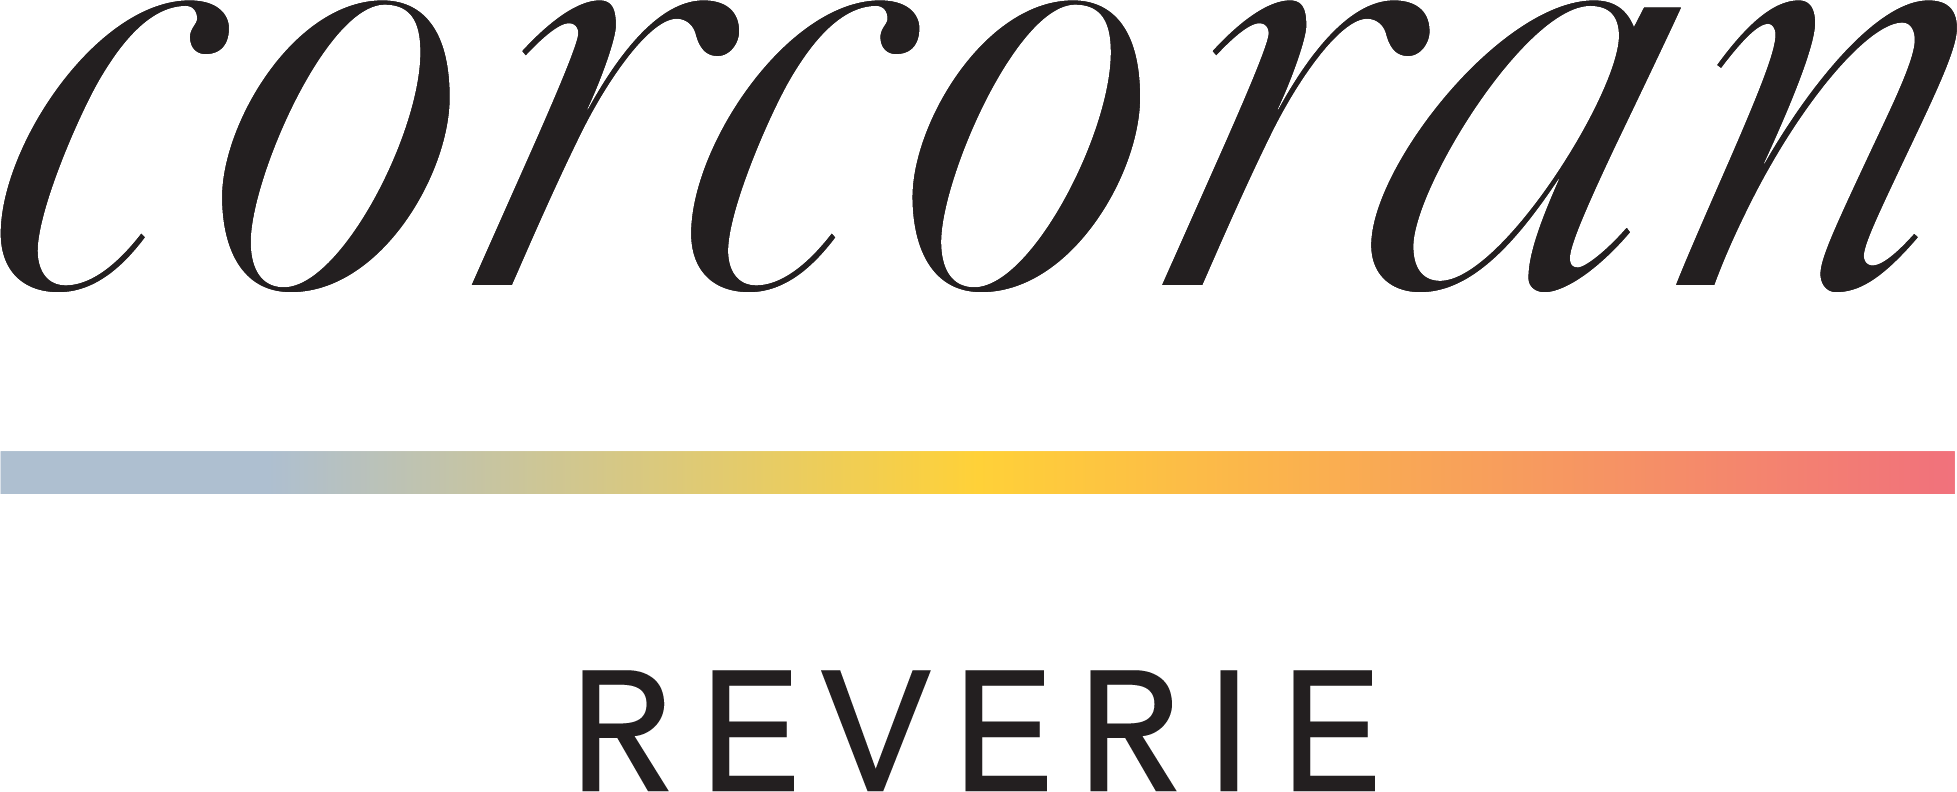 Corcoran Reverie logo